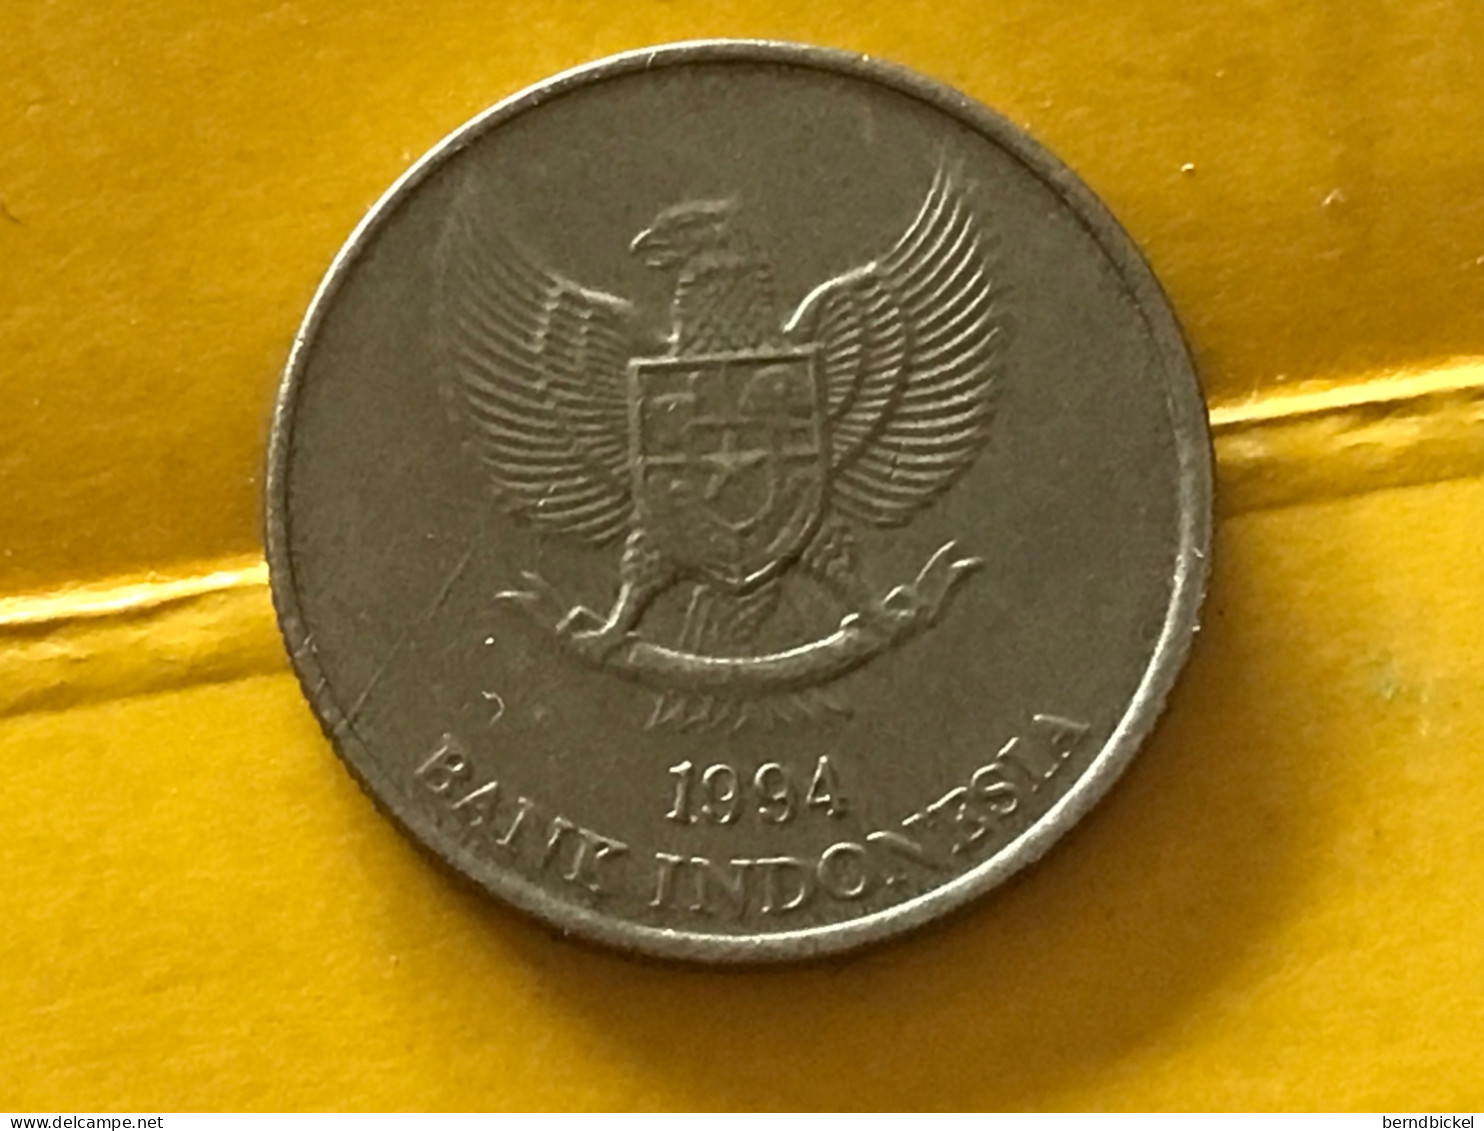 Münze Münzen Umlaufmünze Indonesien 50 Rupien 1994 - Indonesien